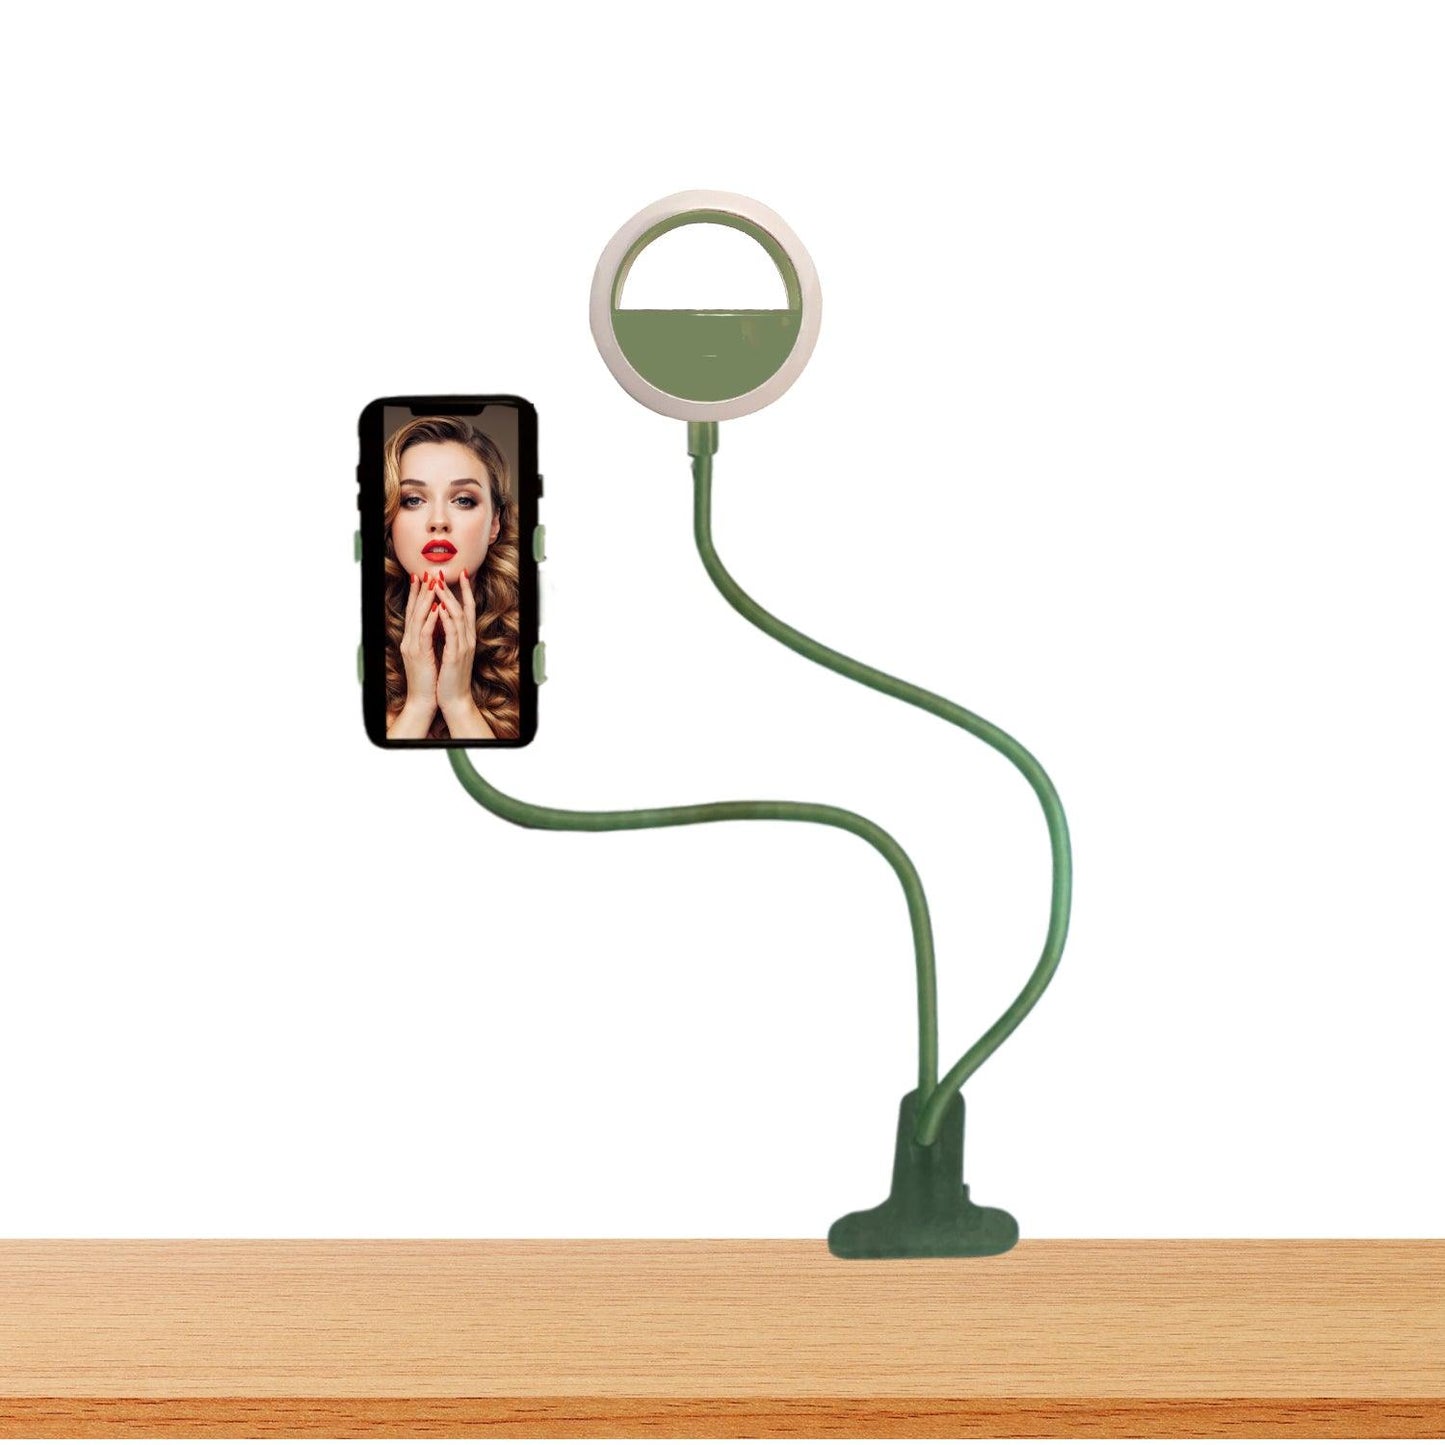 Flexible Arm Phone Holder Ring Light |Clamp Mount for Desk, Bed, Office